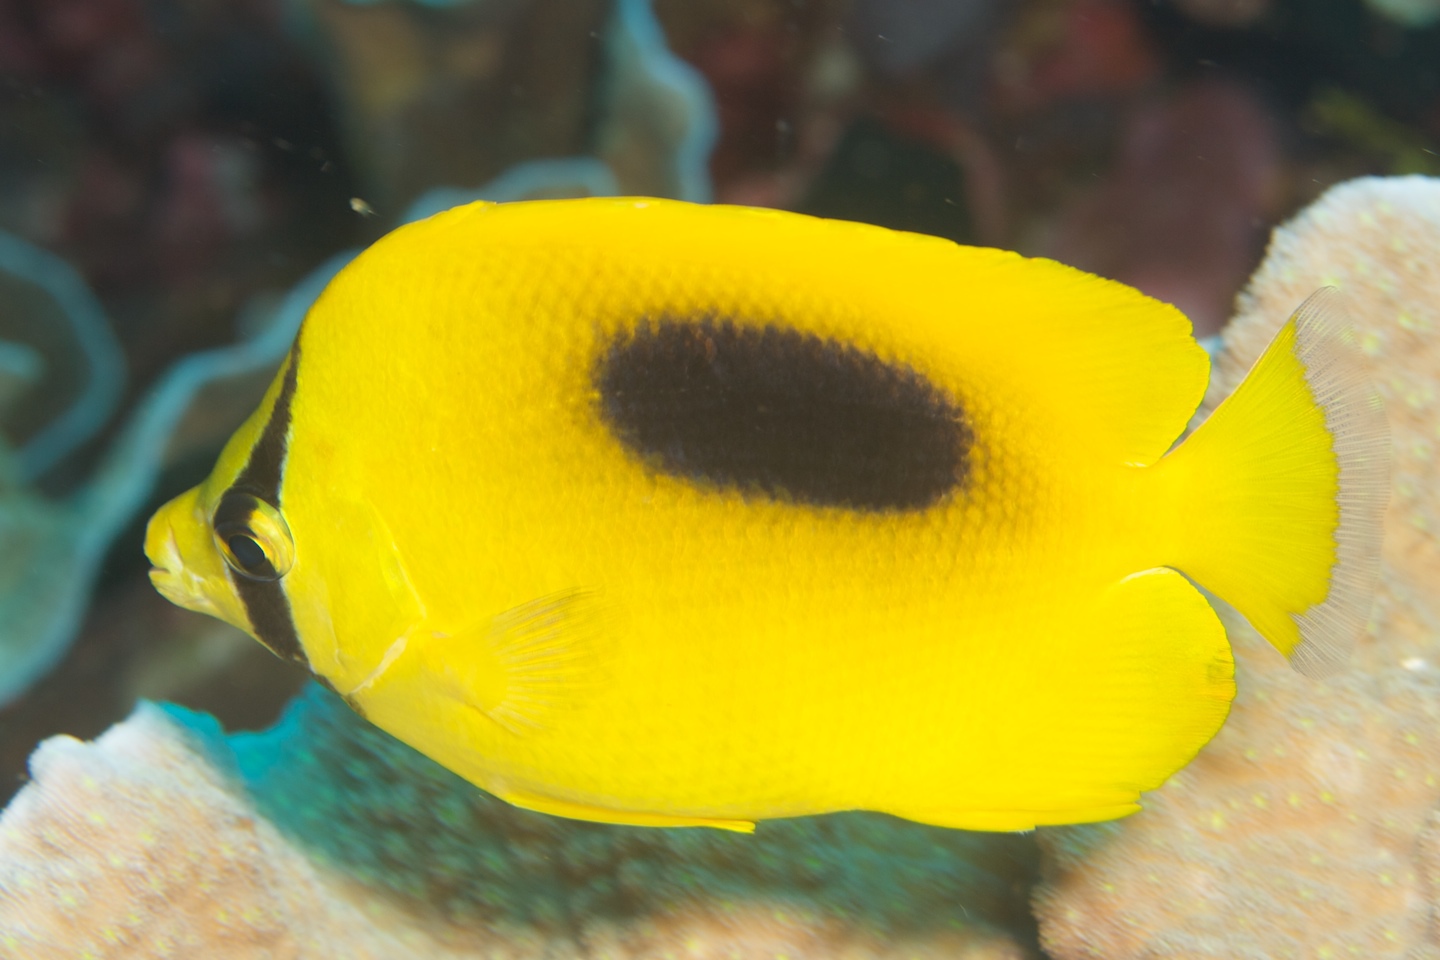 Oval-spot butterflyfish